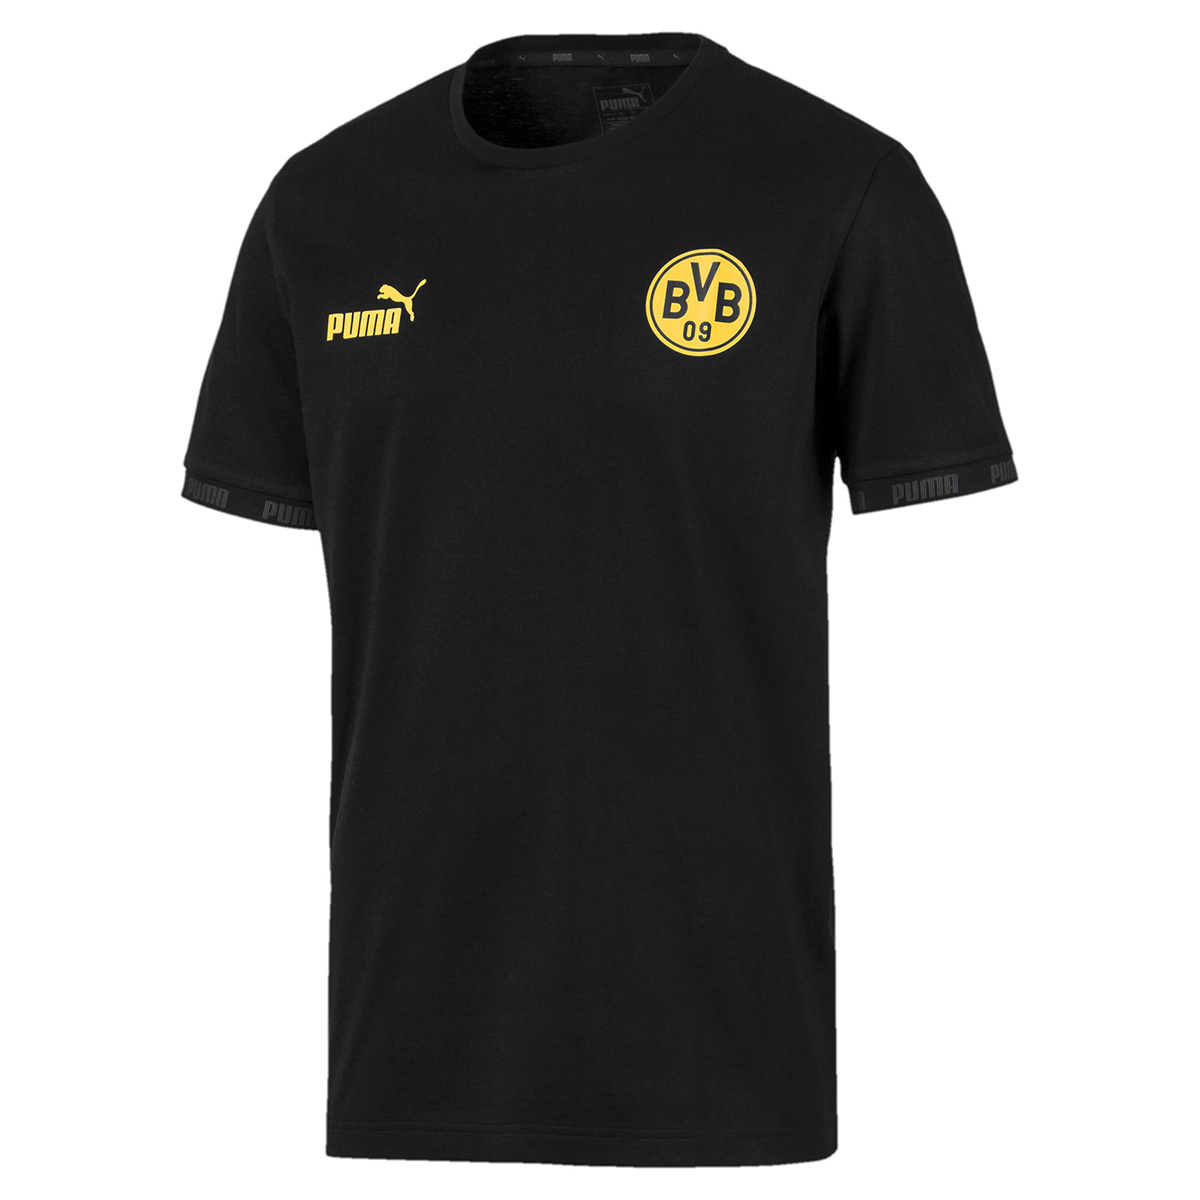 Puma BVB FtblCulture Tee T-Shirt Herren Borusse Dortmund schwarz 755787 02